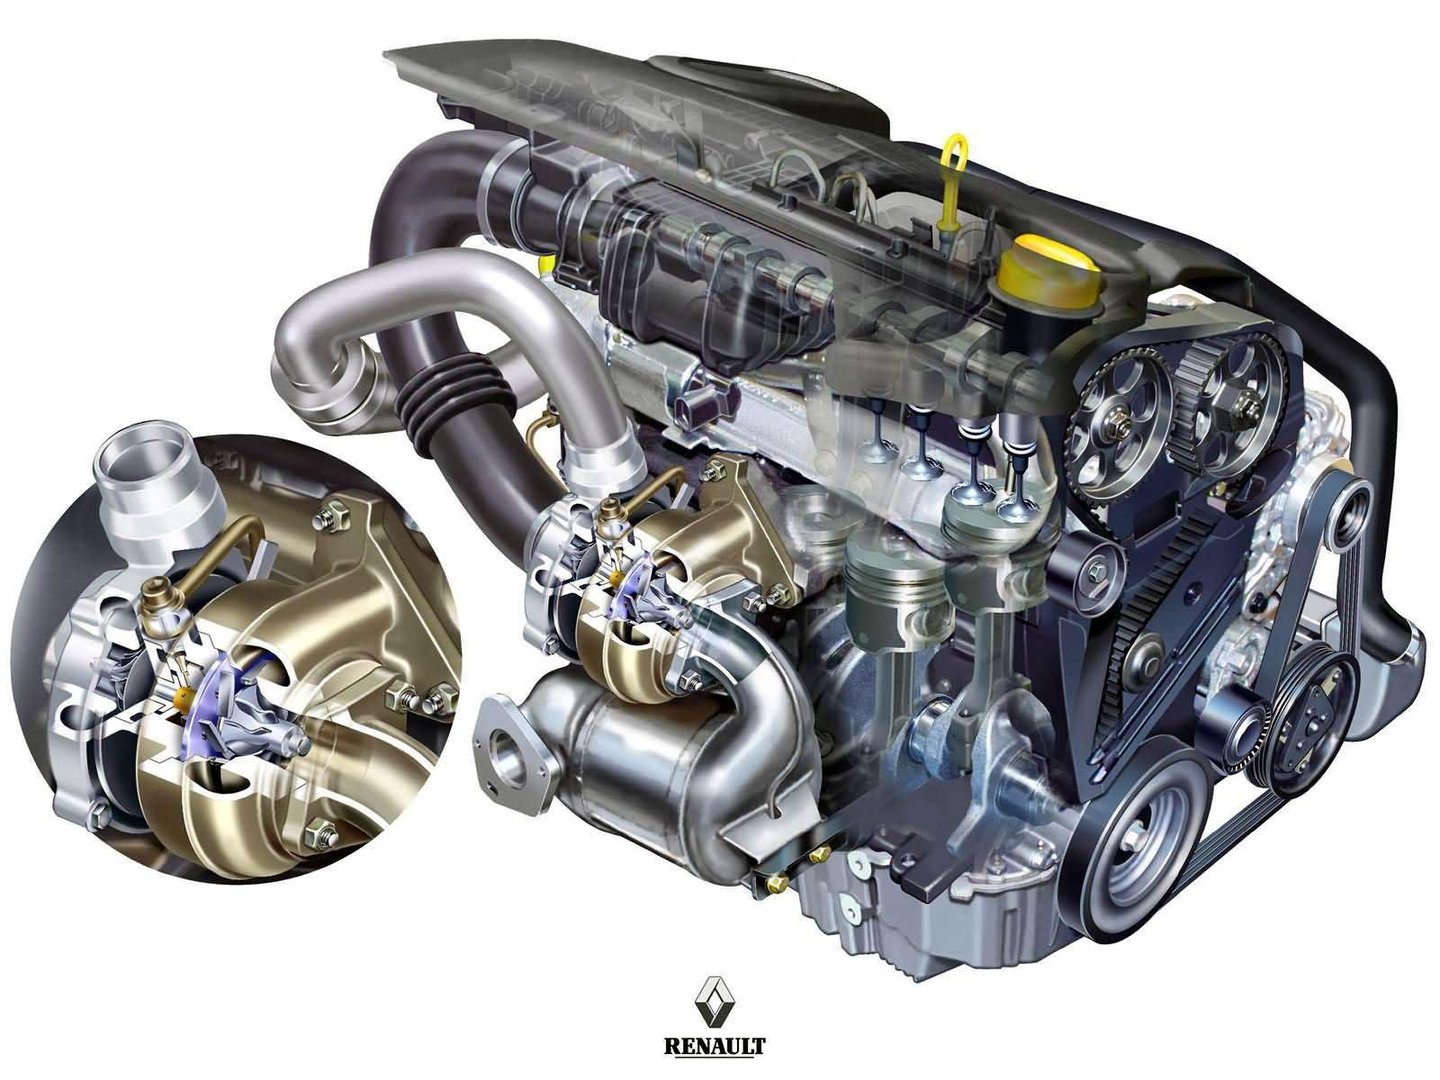 Novo 1  7 dCi  Revolu  o nos diesel da Renault Observador